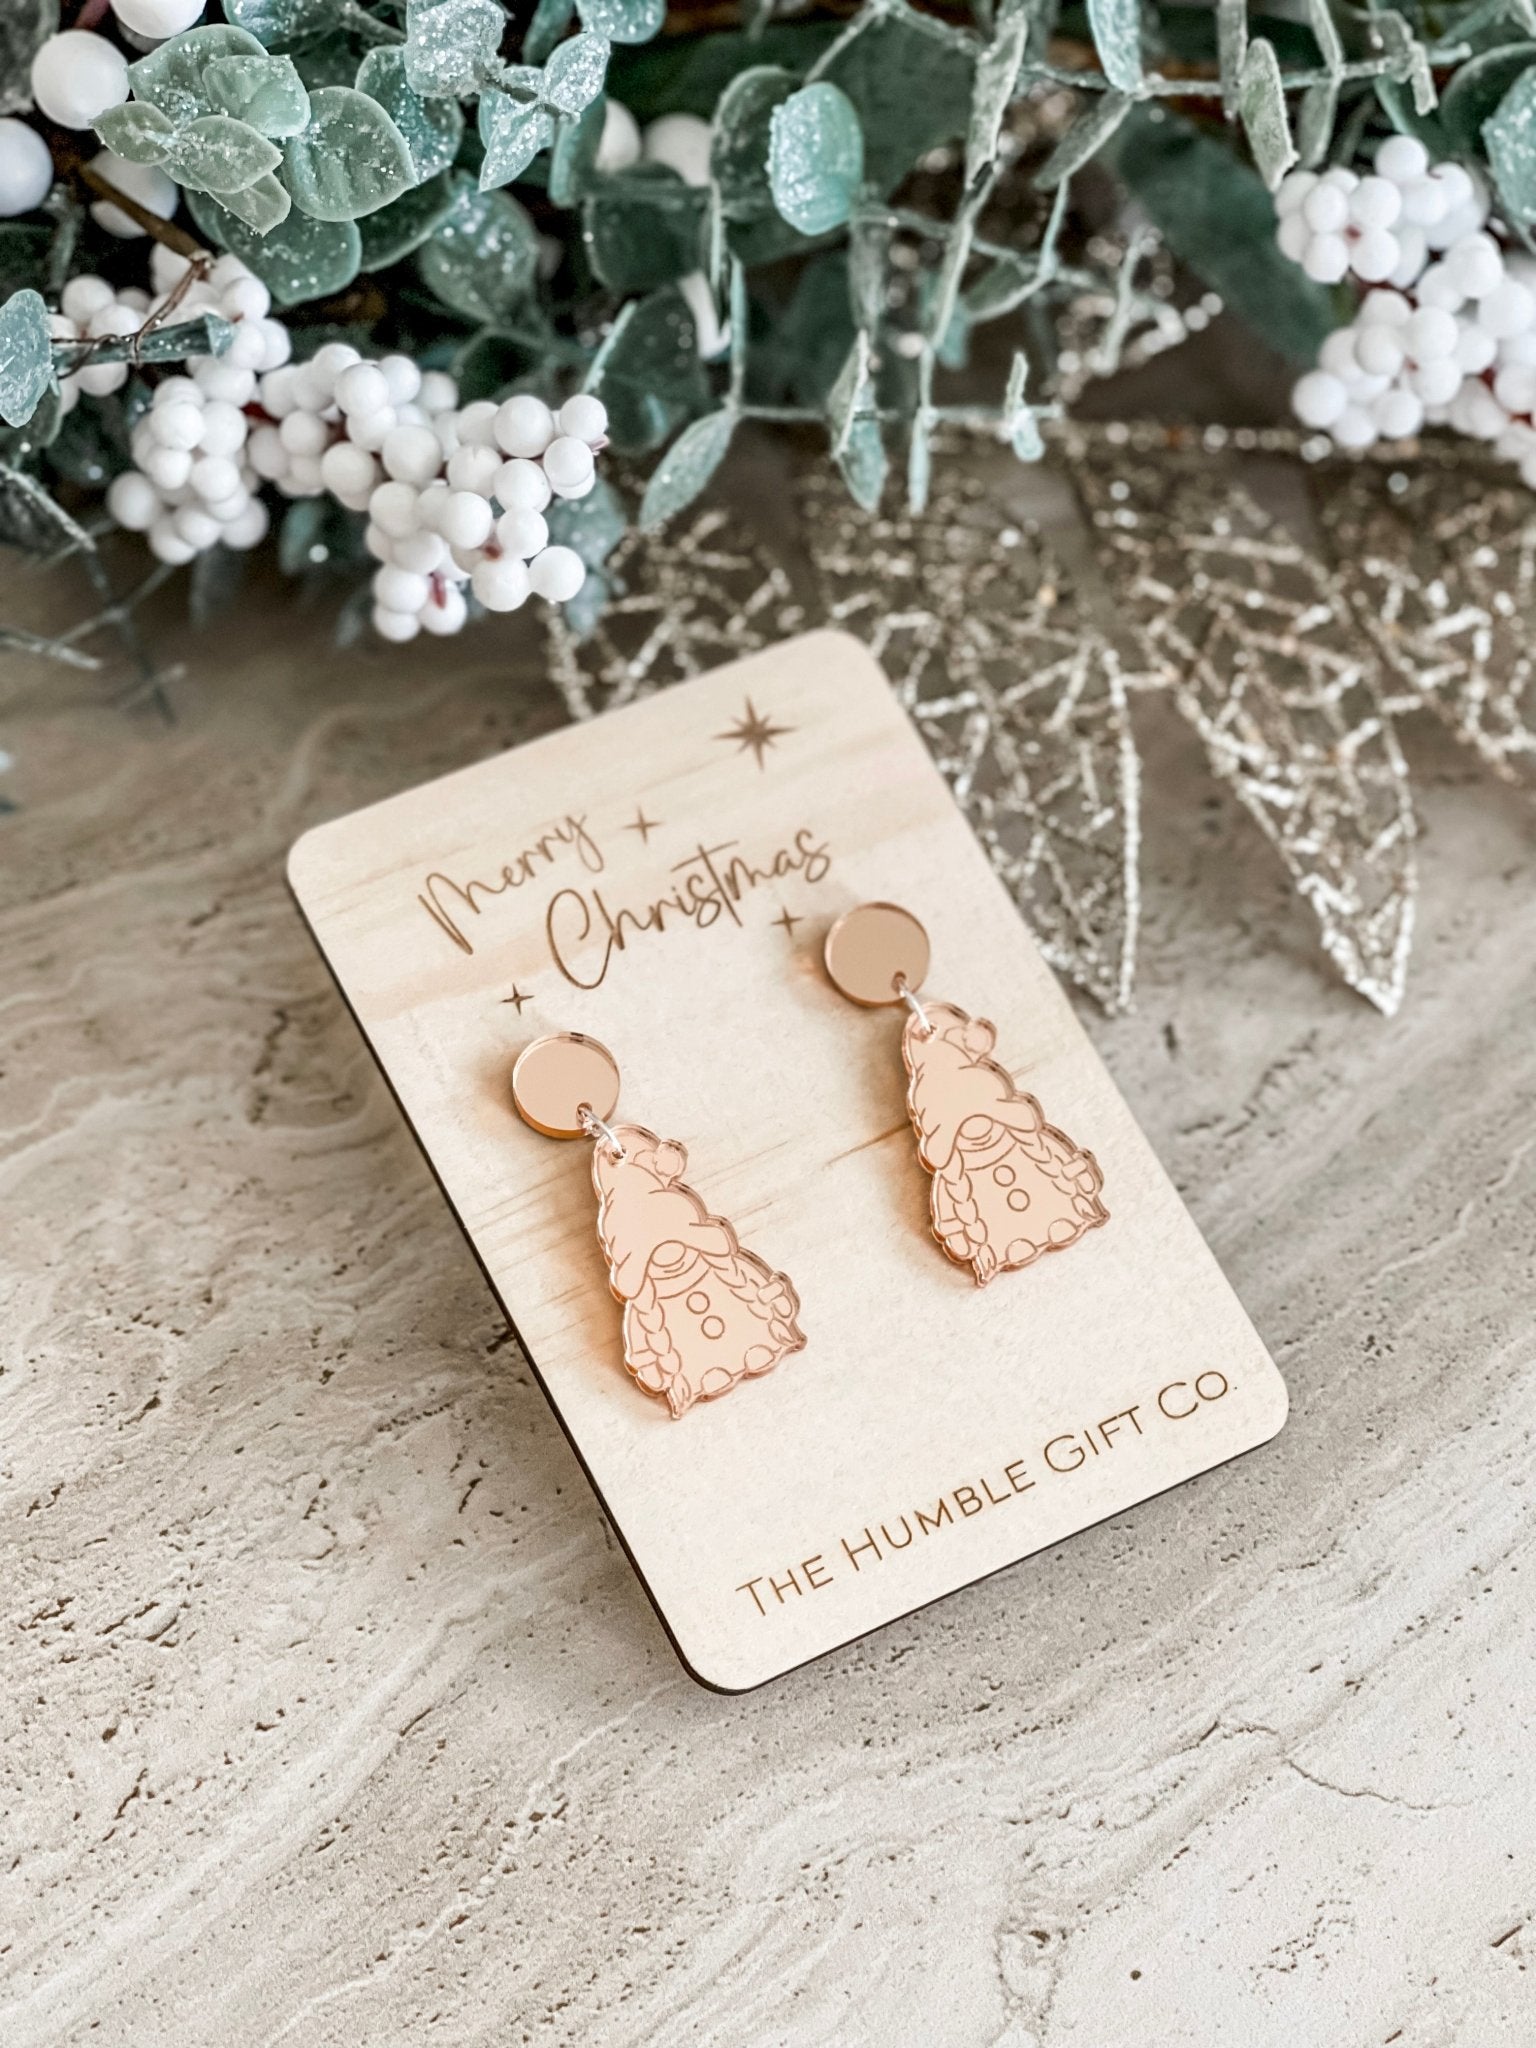 Gnome Christmas Earrings - The Humble Gift Co.